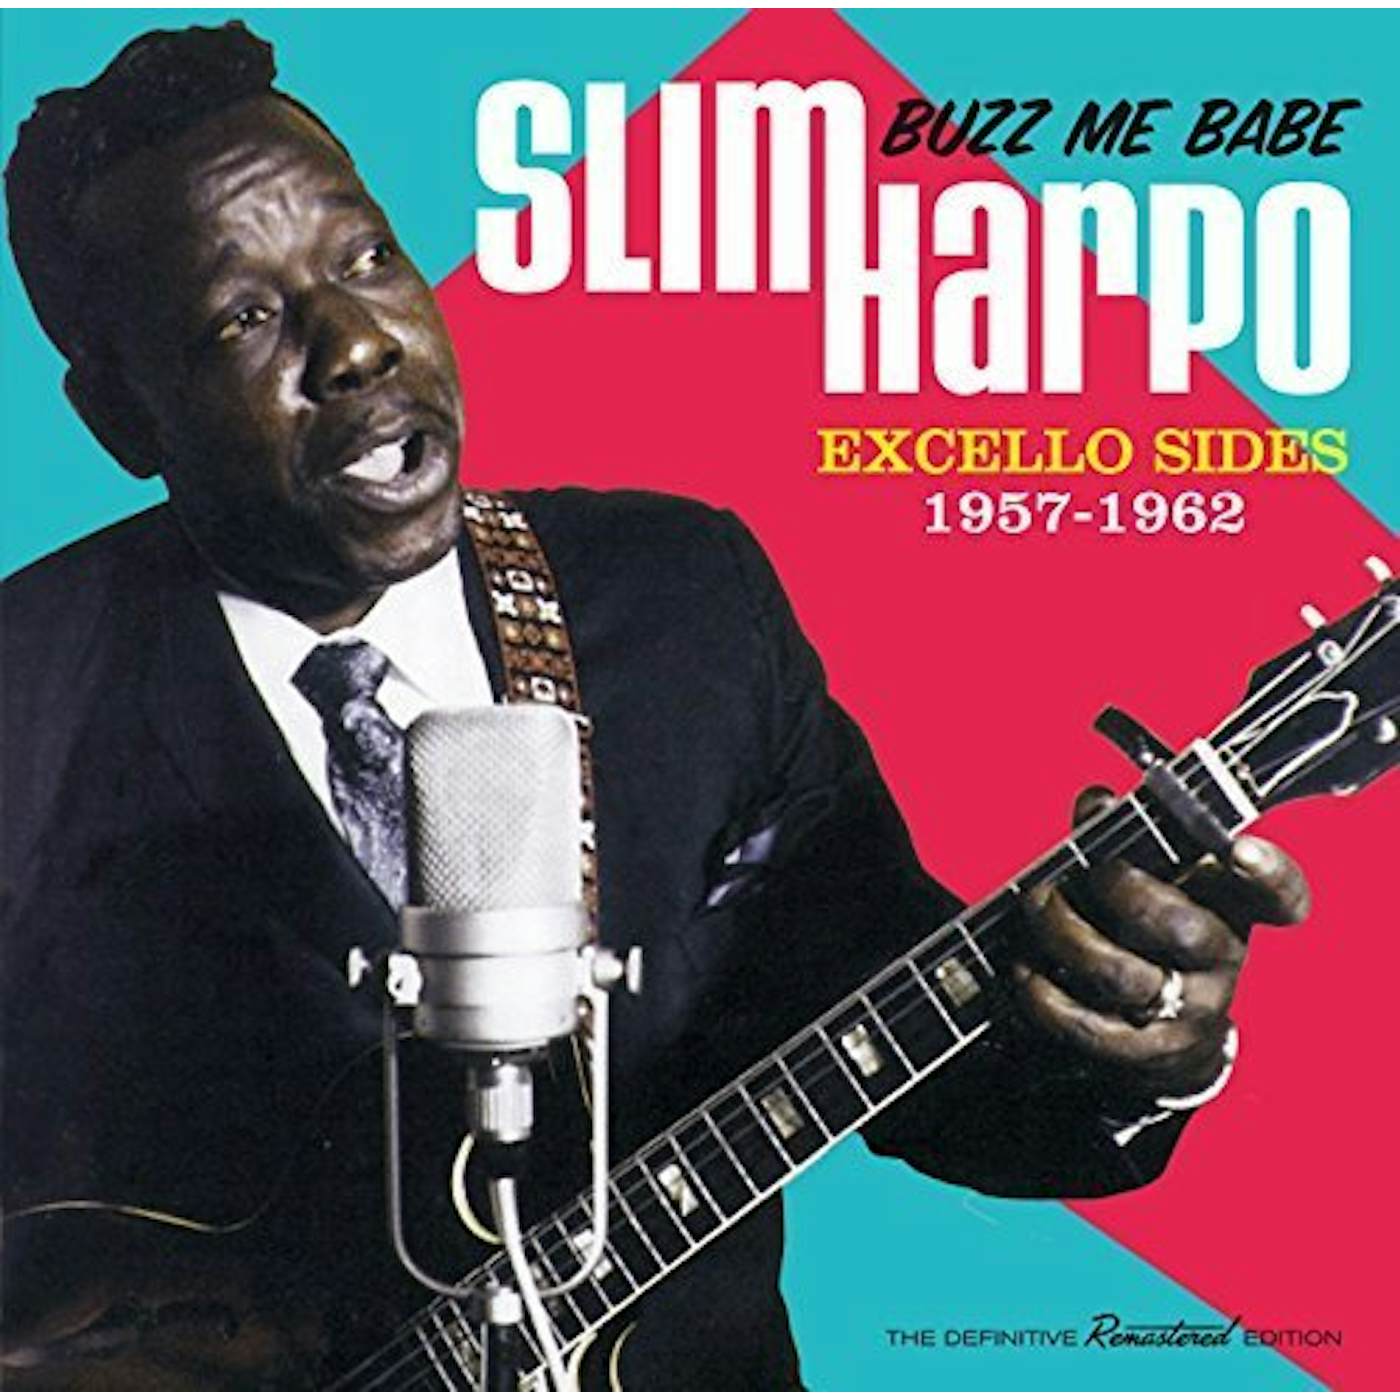 Slim Harpo BUZZ ME BABE: EXCELLO SIDES 1957-1961 Vinyl Record - Limited Edition, 180 Gram Pressing